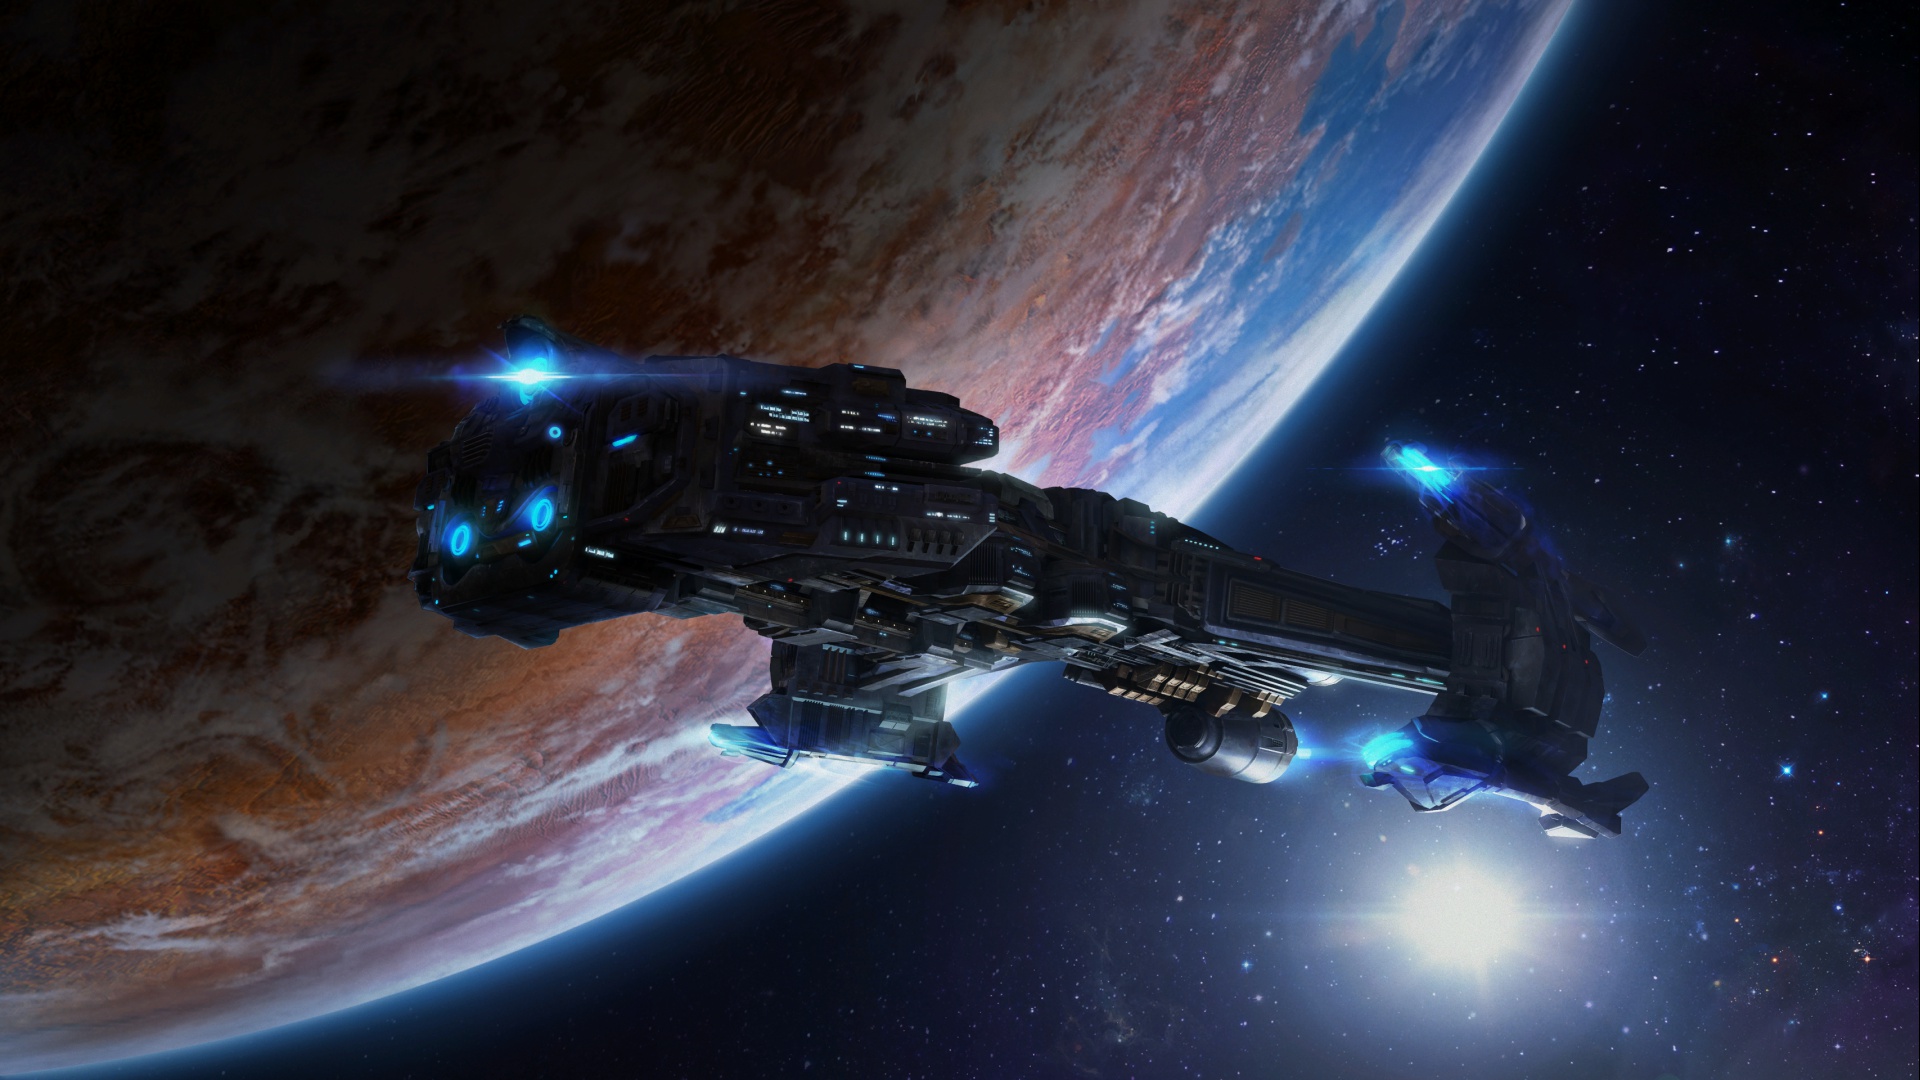 Descarga gratuita de fondo de pantalla para móvil de Starcraft, Espacio, Planeta, Nave Espacial, Videojuego, Crucero De Batalla (Starcraft).